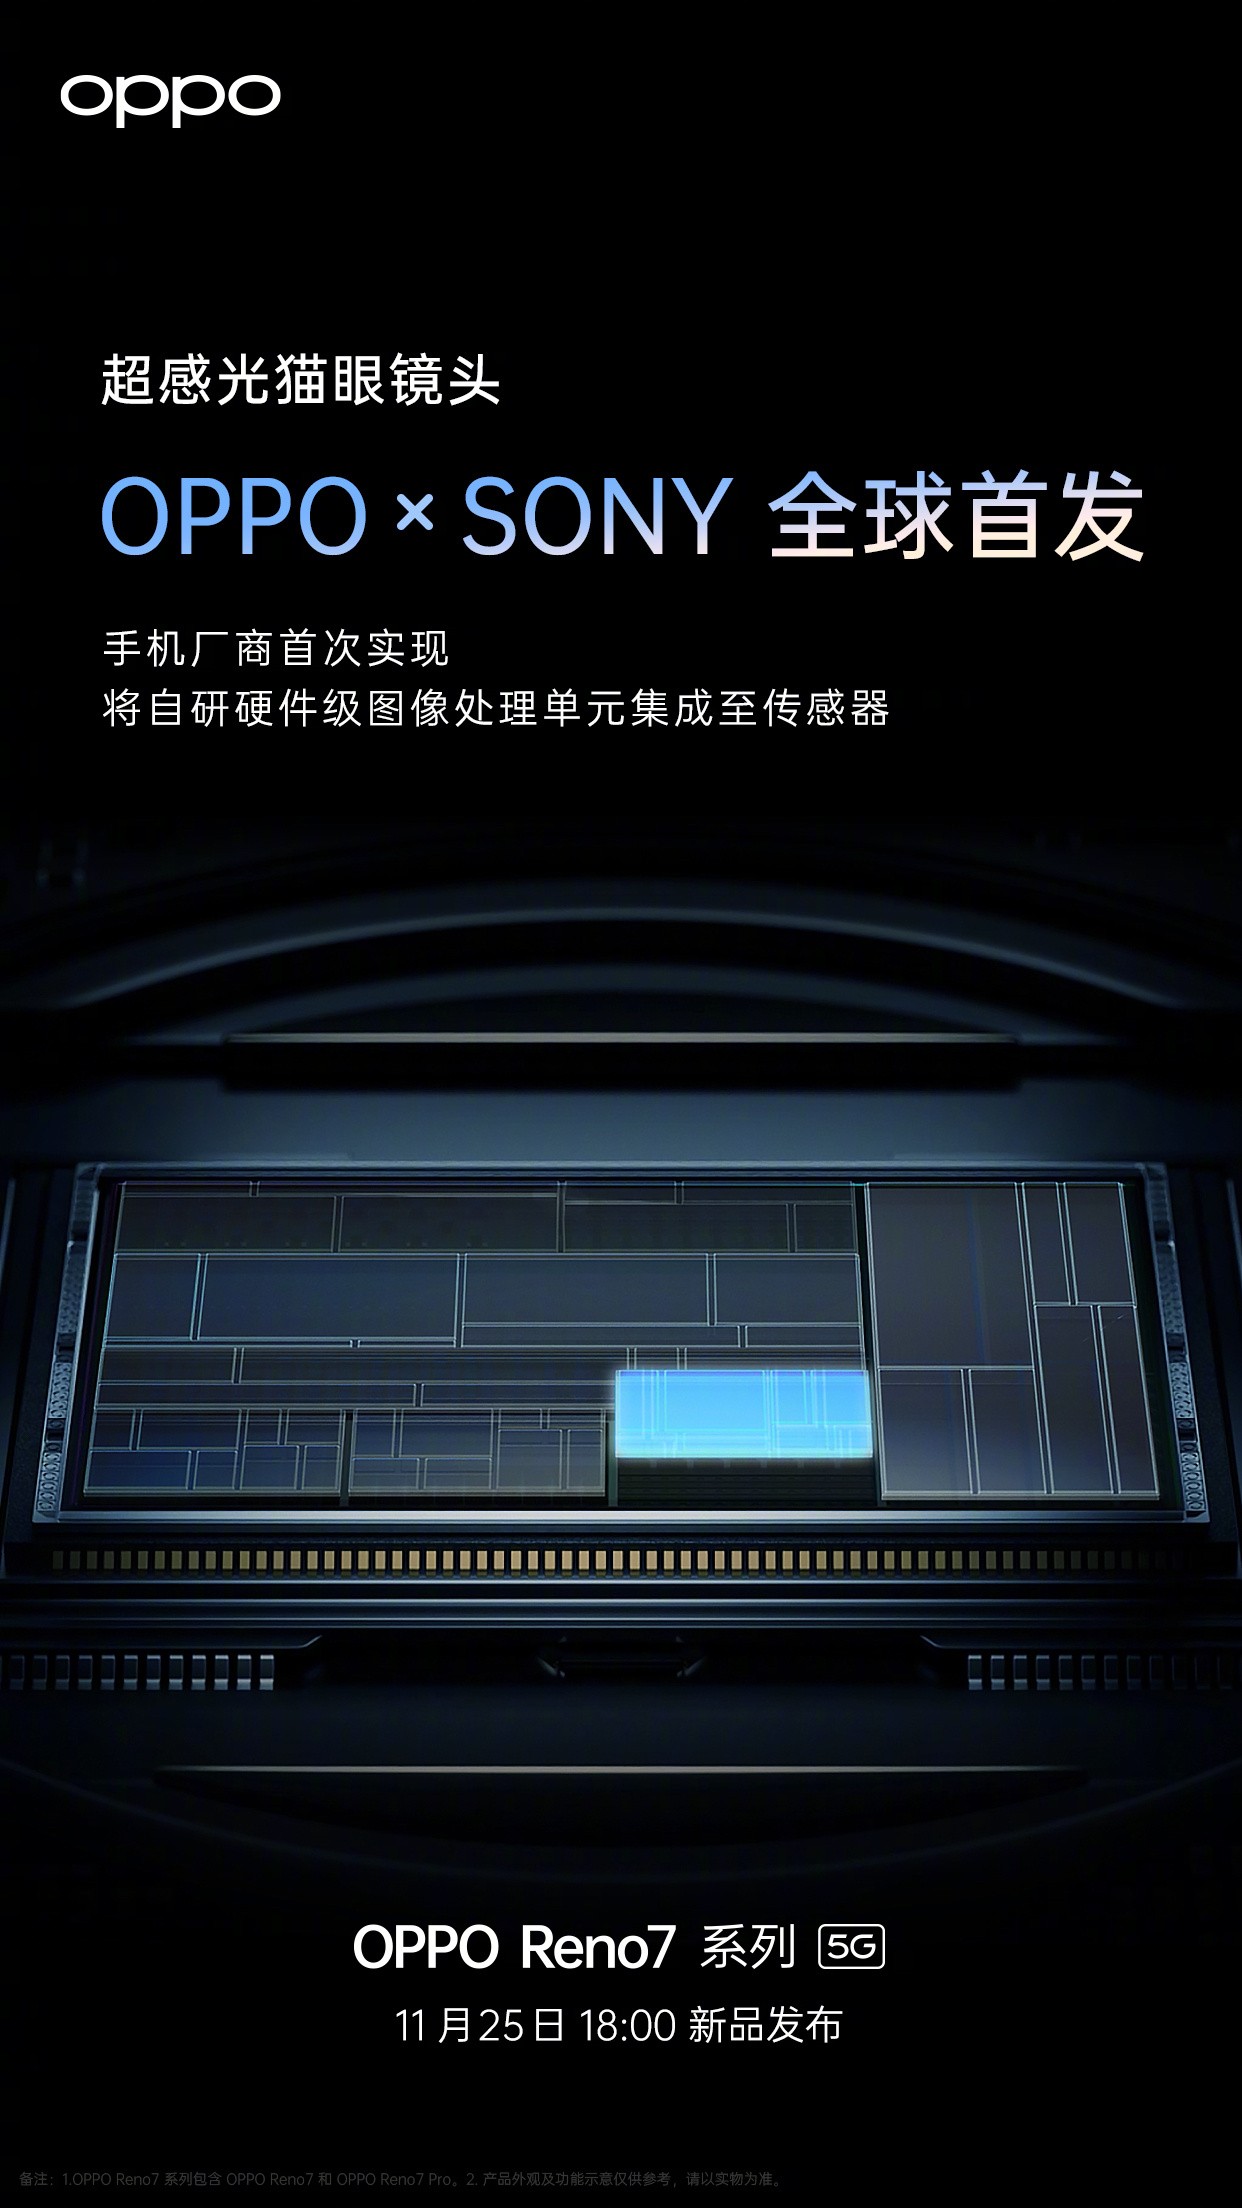 OPPO Reno7确认首发搭载IMX709，自拍更明亮清晰!